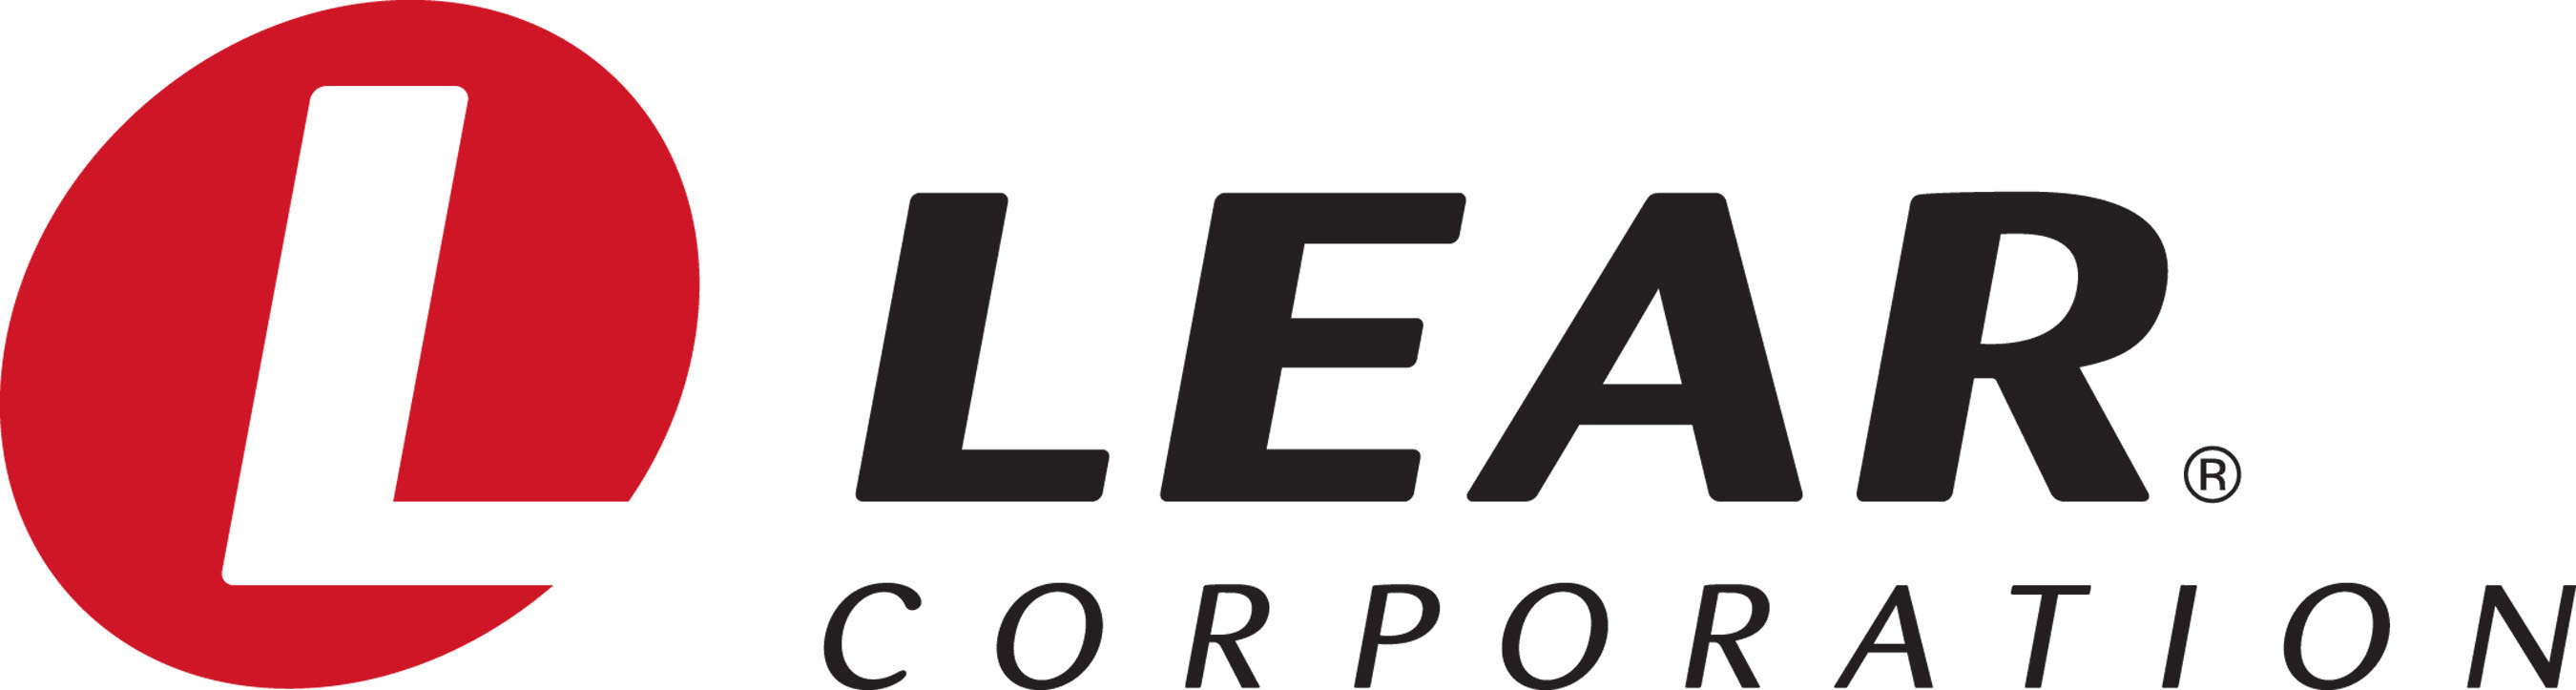 Lear Corporation Logo. (PRNewsFoto/Lear Corporation)